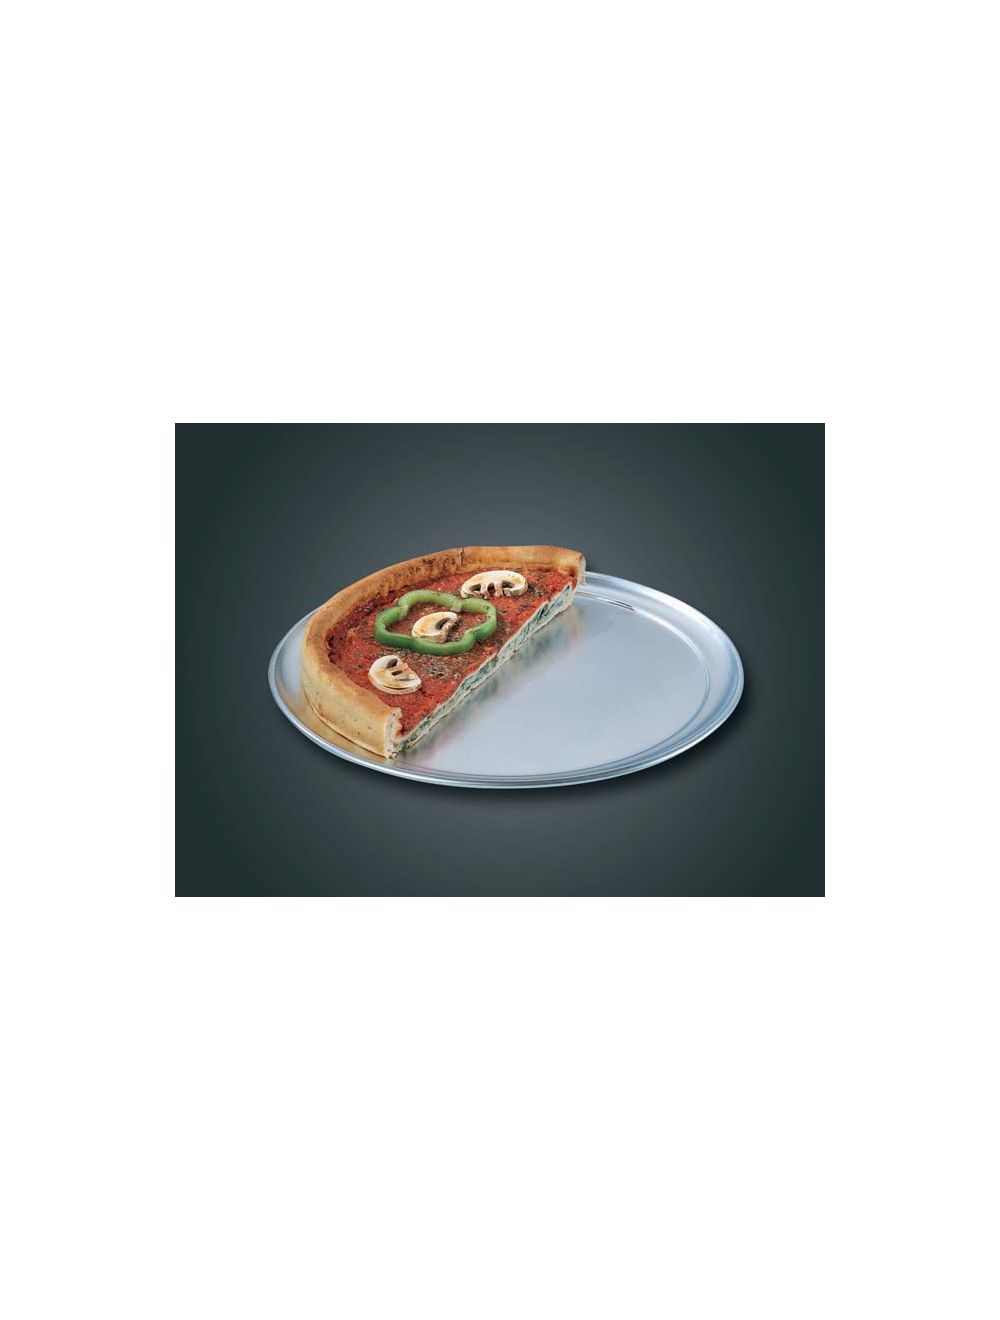 Pizza Pan, wide rim, 13, solid, 18 gauge aluminum